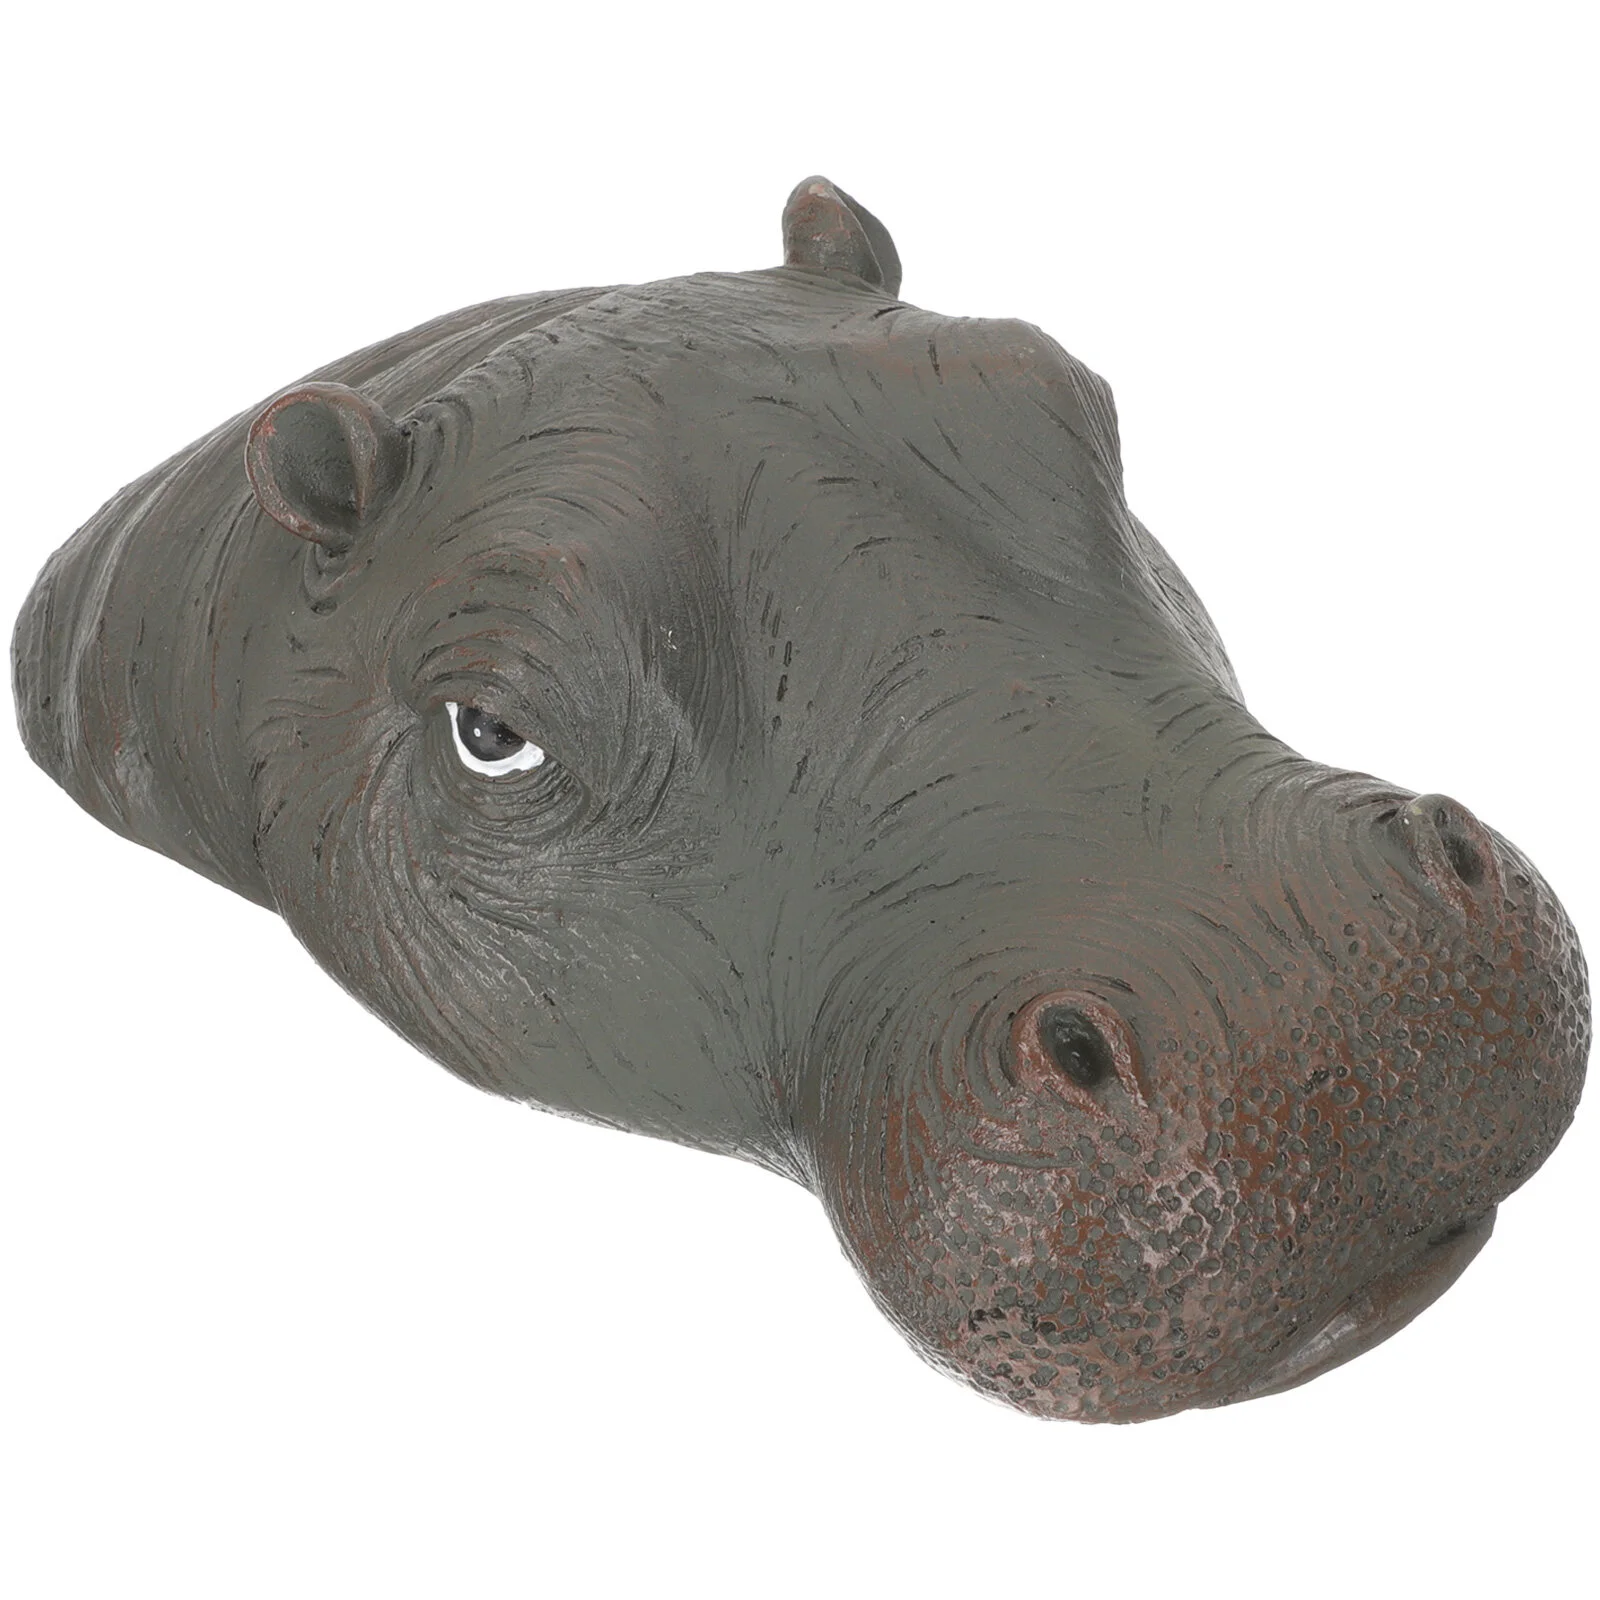 

Hippopotamus Head Statue Pond Floating Decoration Coyote Decoy Resin Water Animal Figurine Craft Lawn Garden